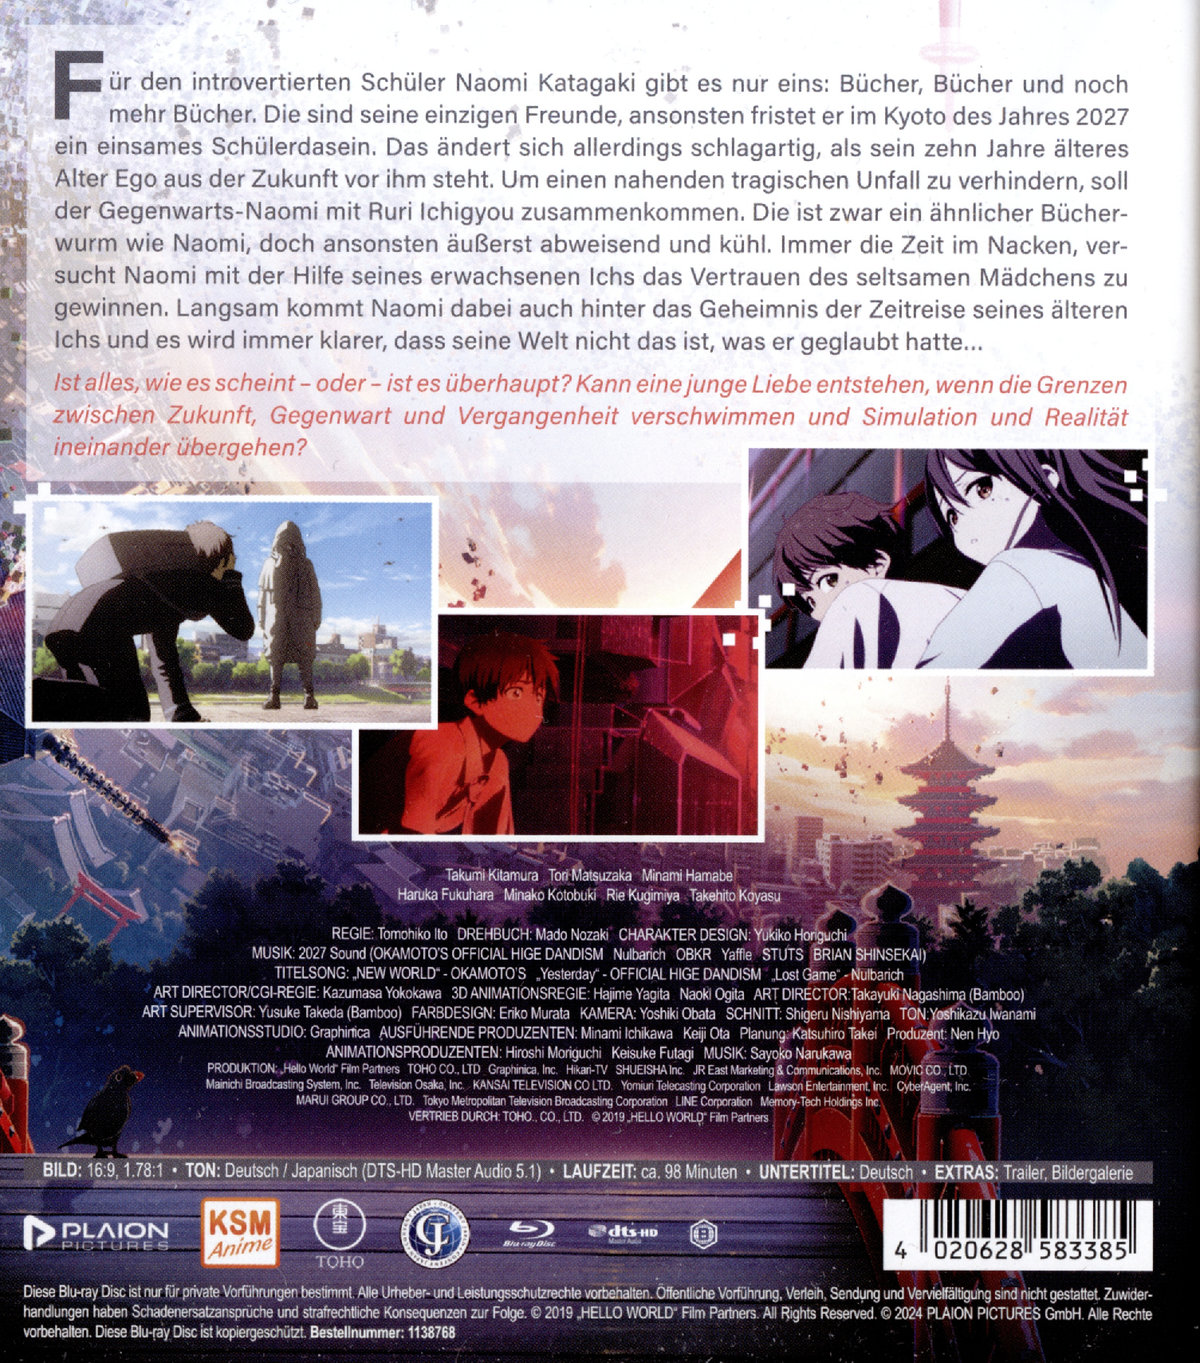 Hello World - New Edition (Blu-ray)  (Blu-ray Disc)